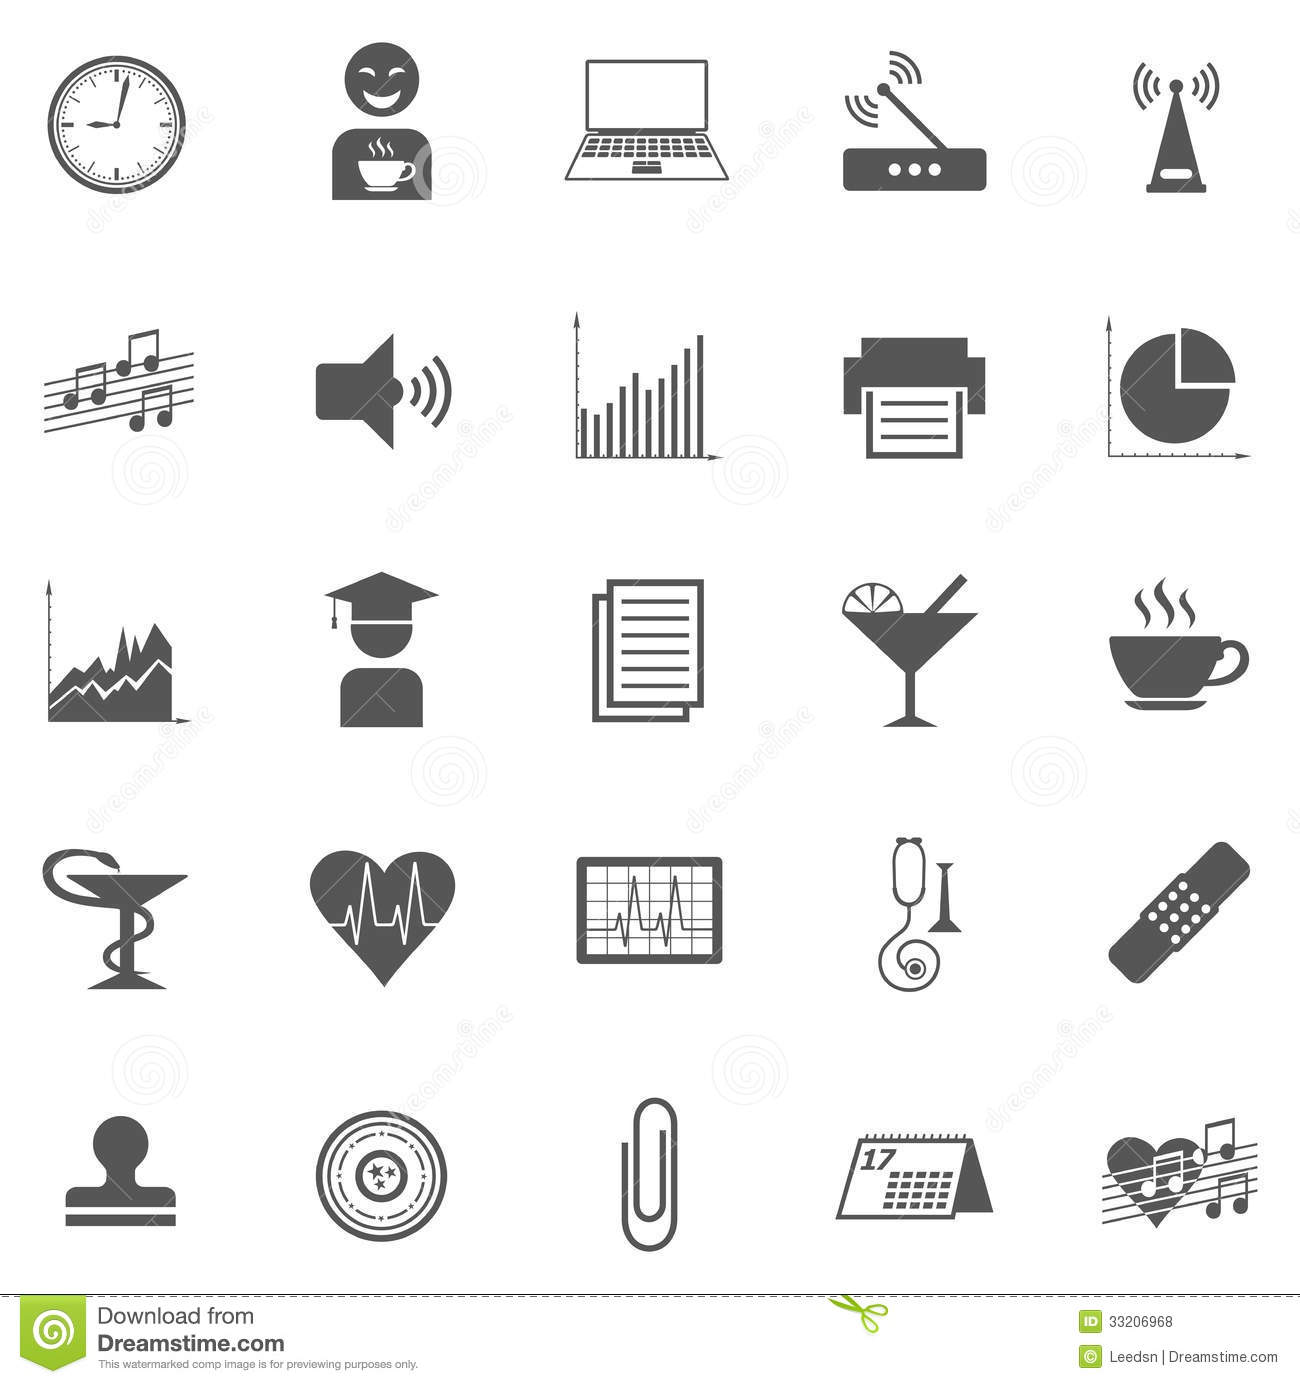 Free Business Symbols Icons